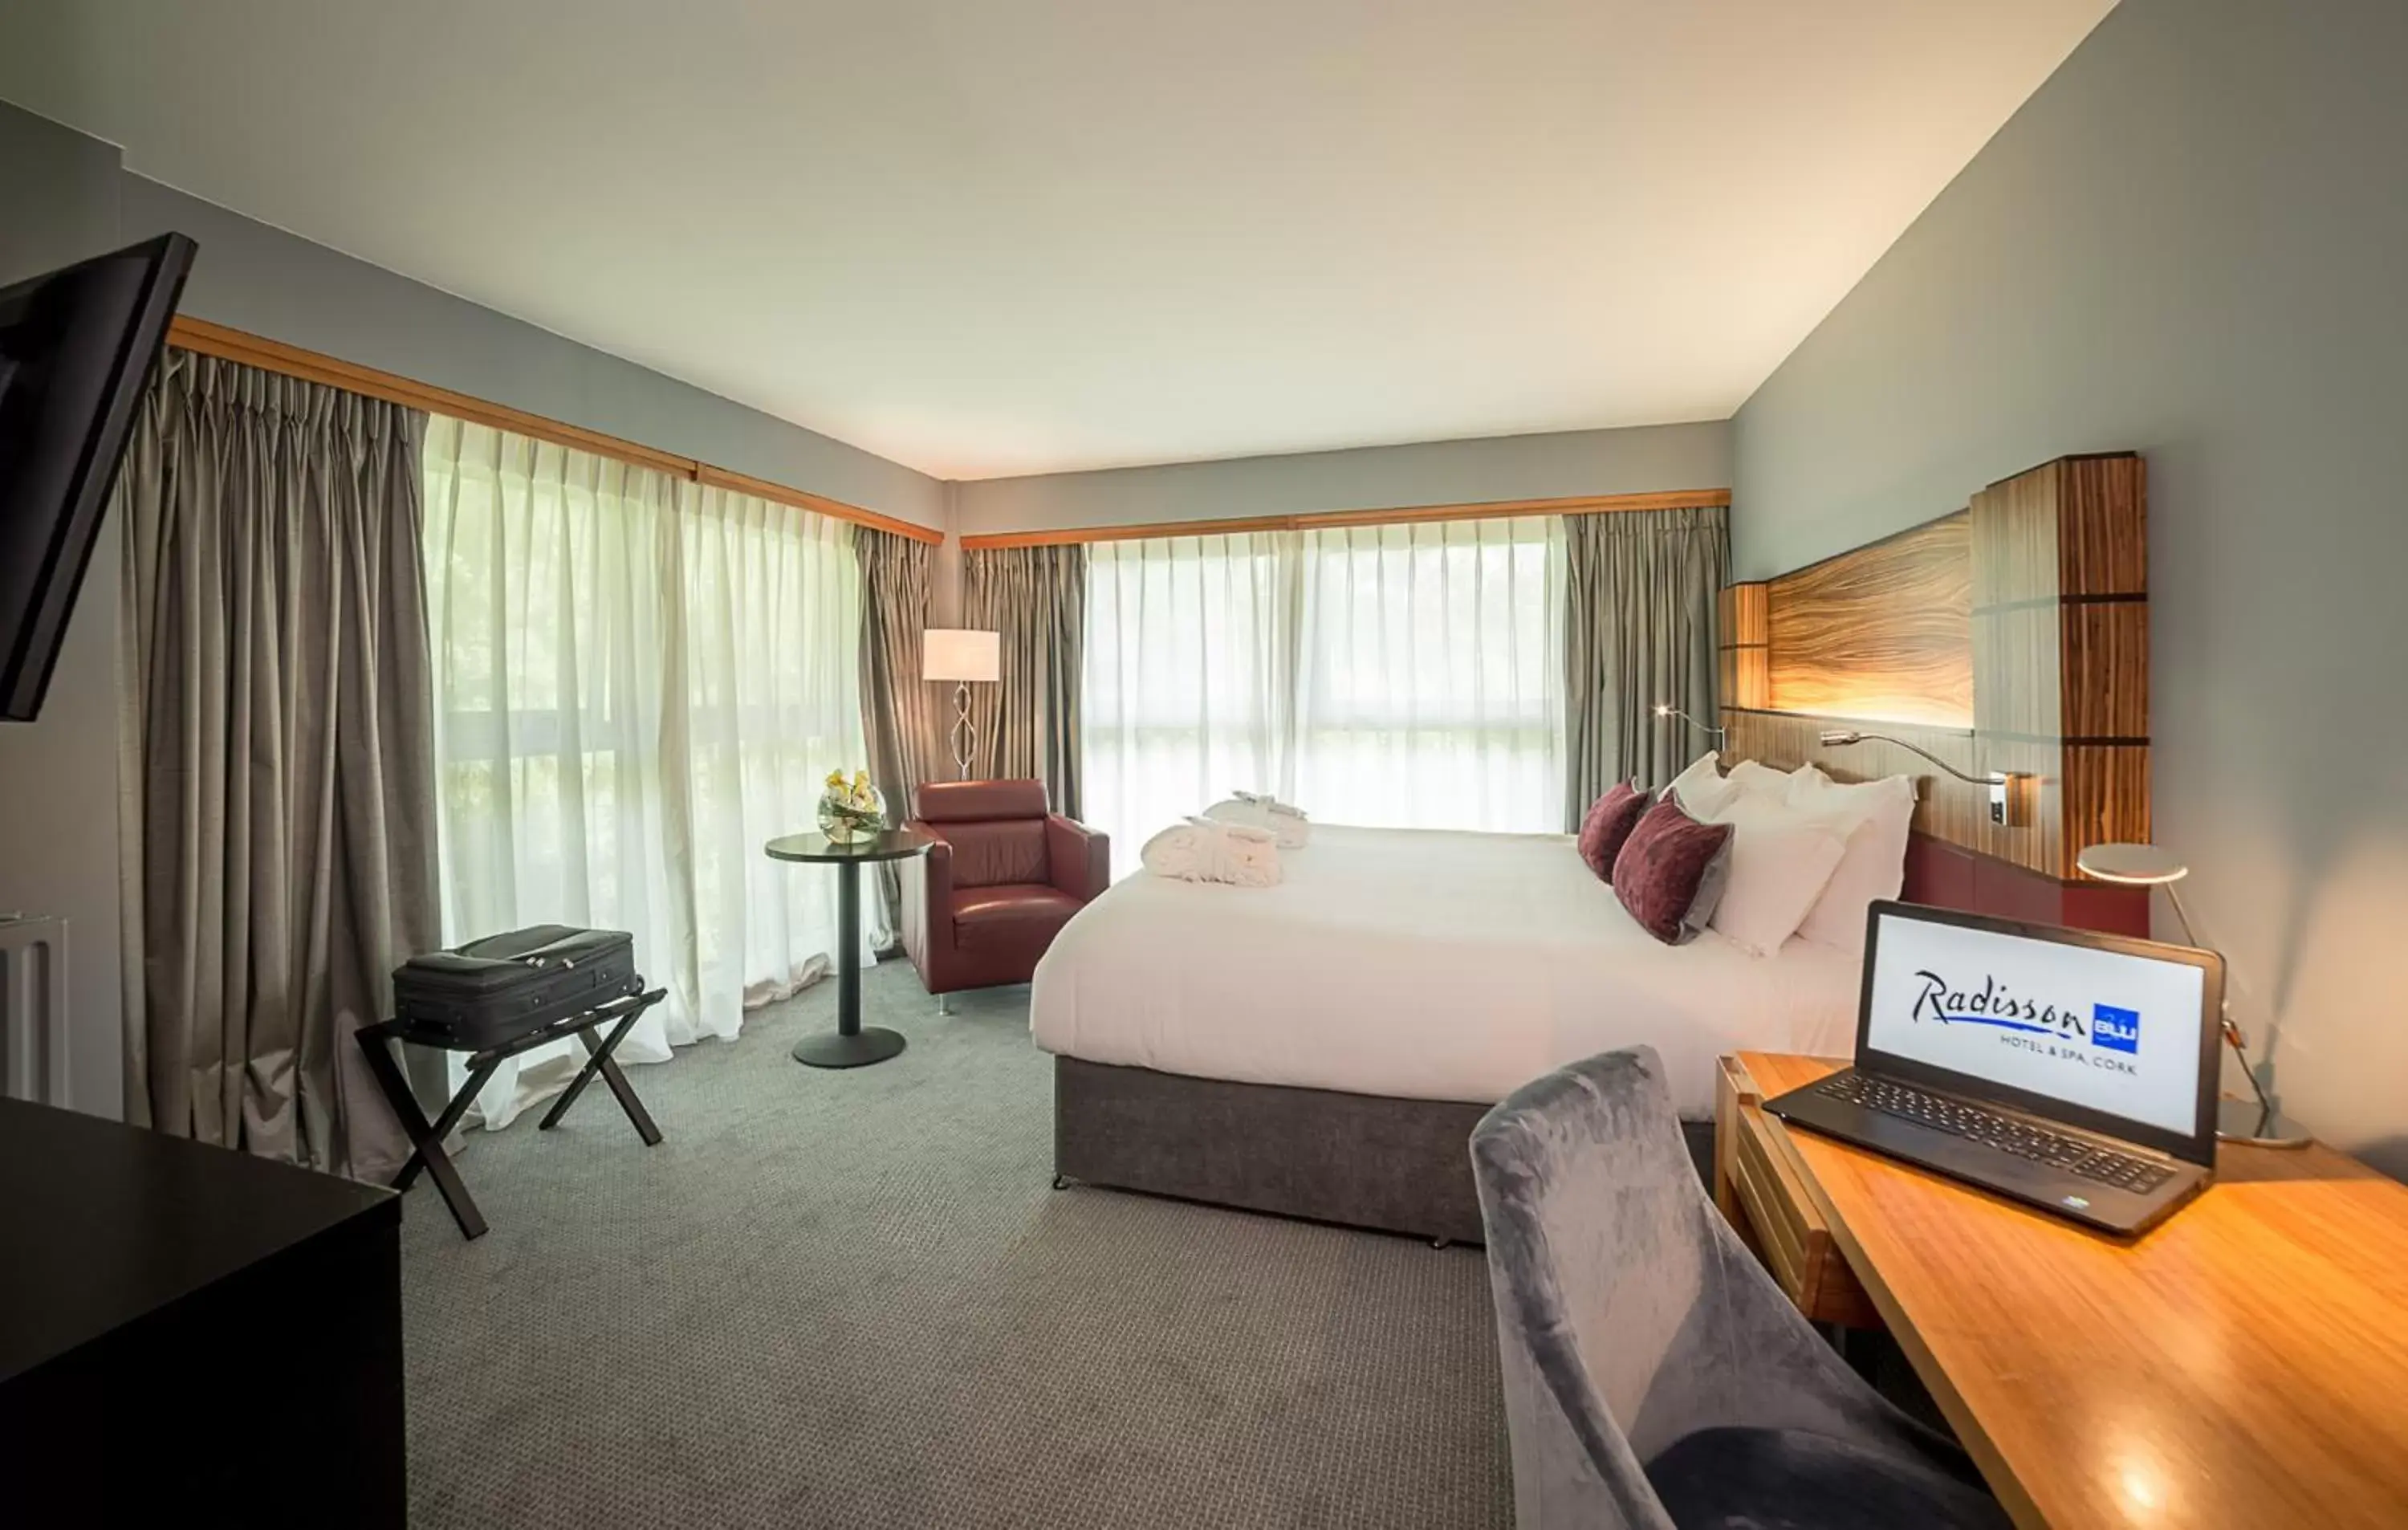 Bedroom, Room Photo in Radisson BLU Hotel & Spa, Little Island Cork